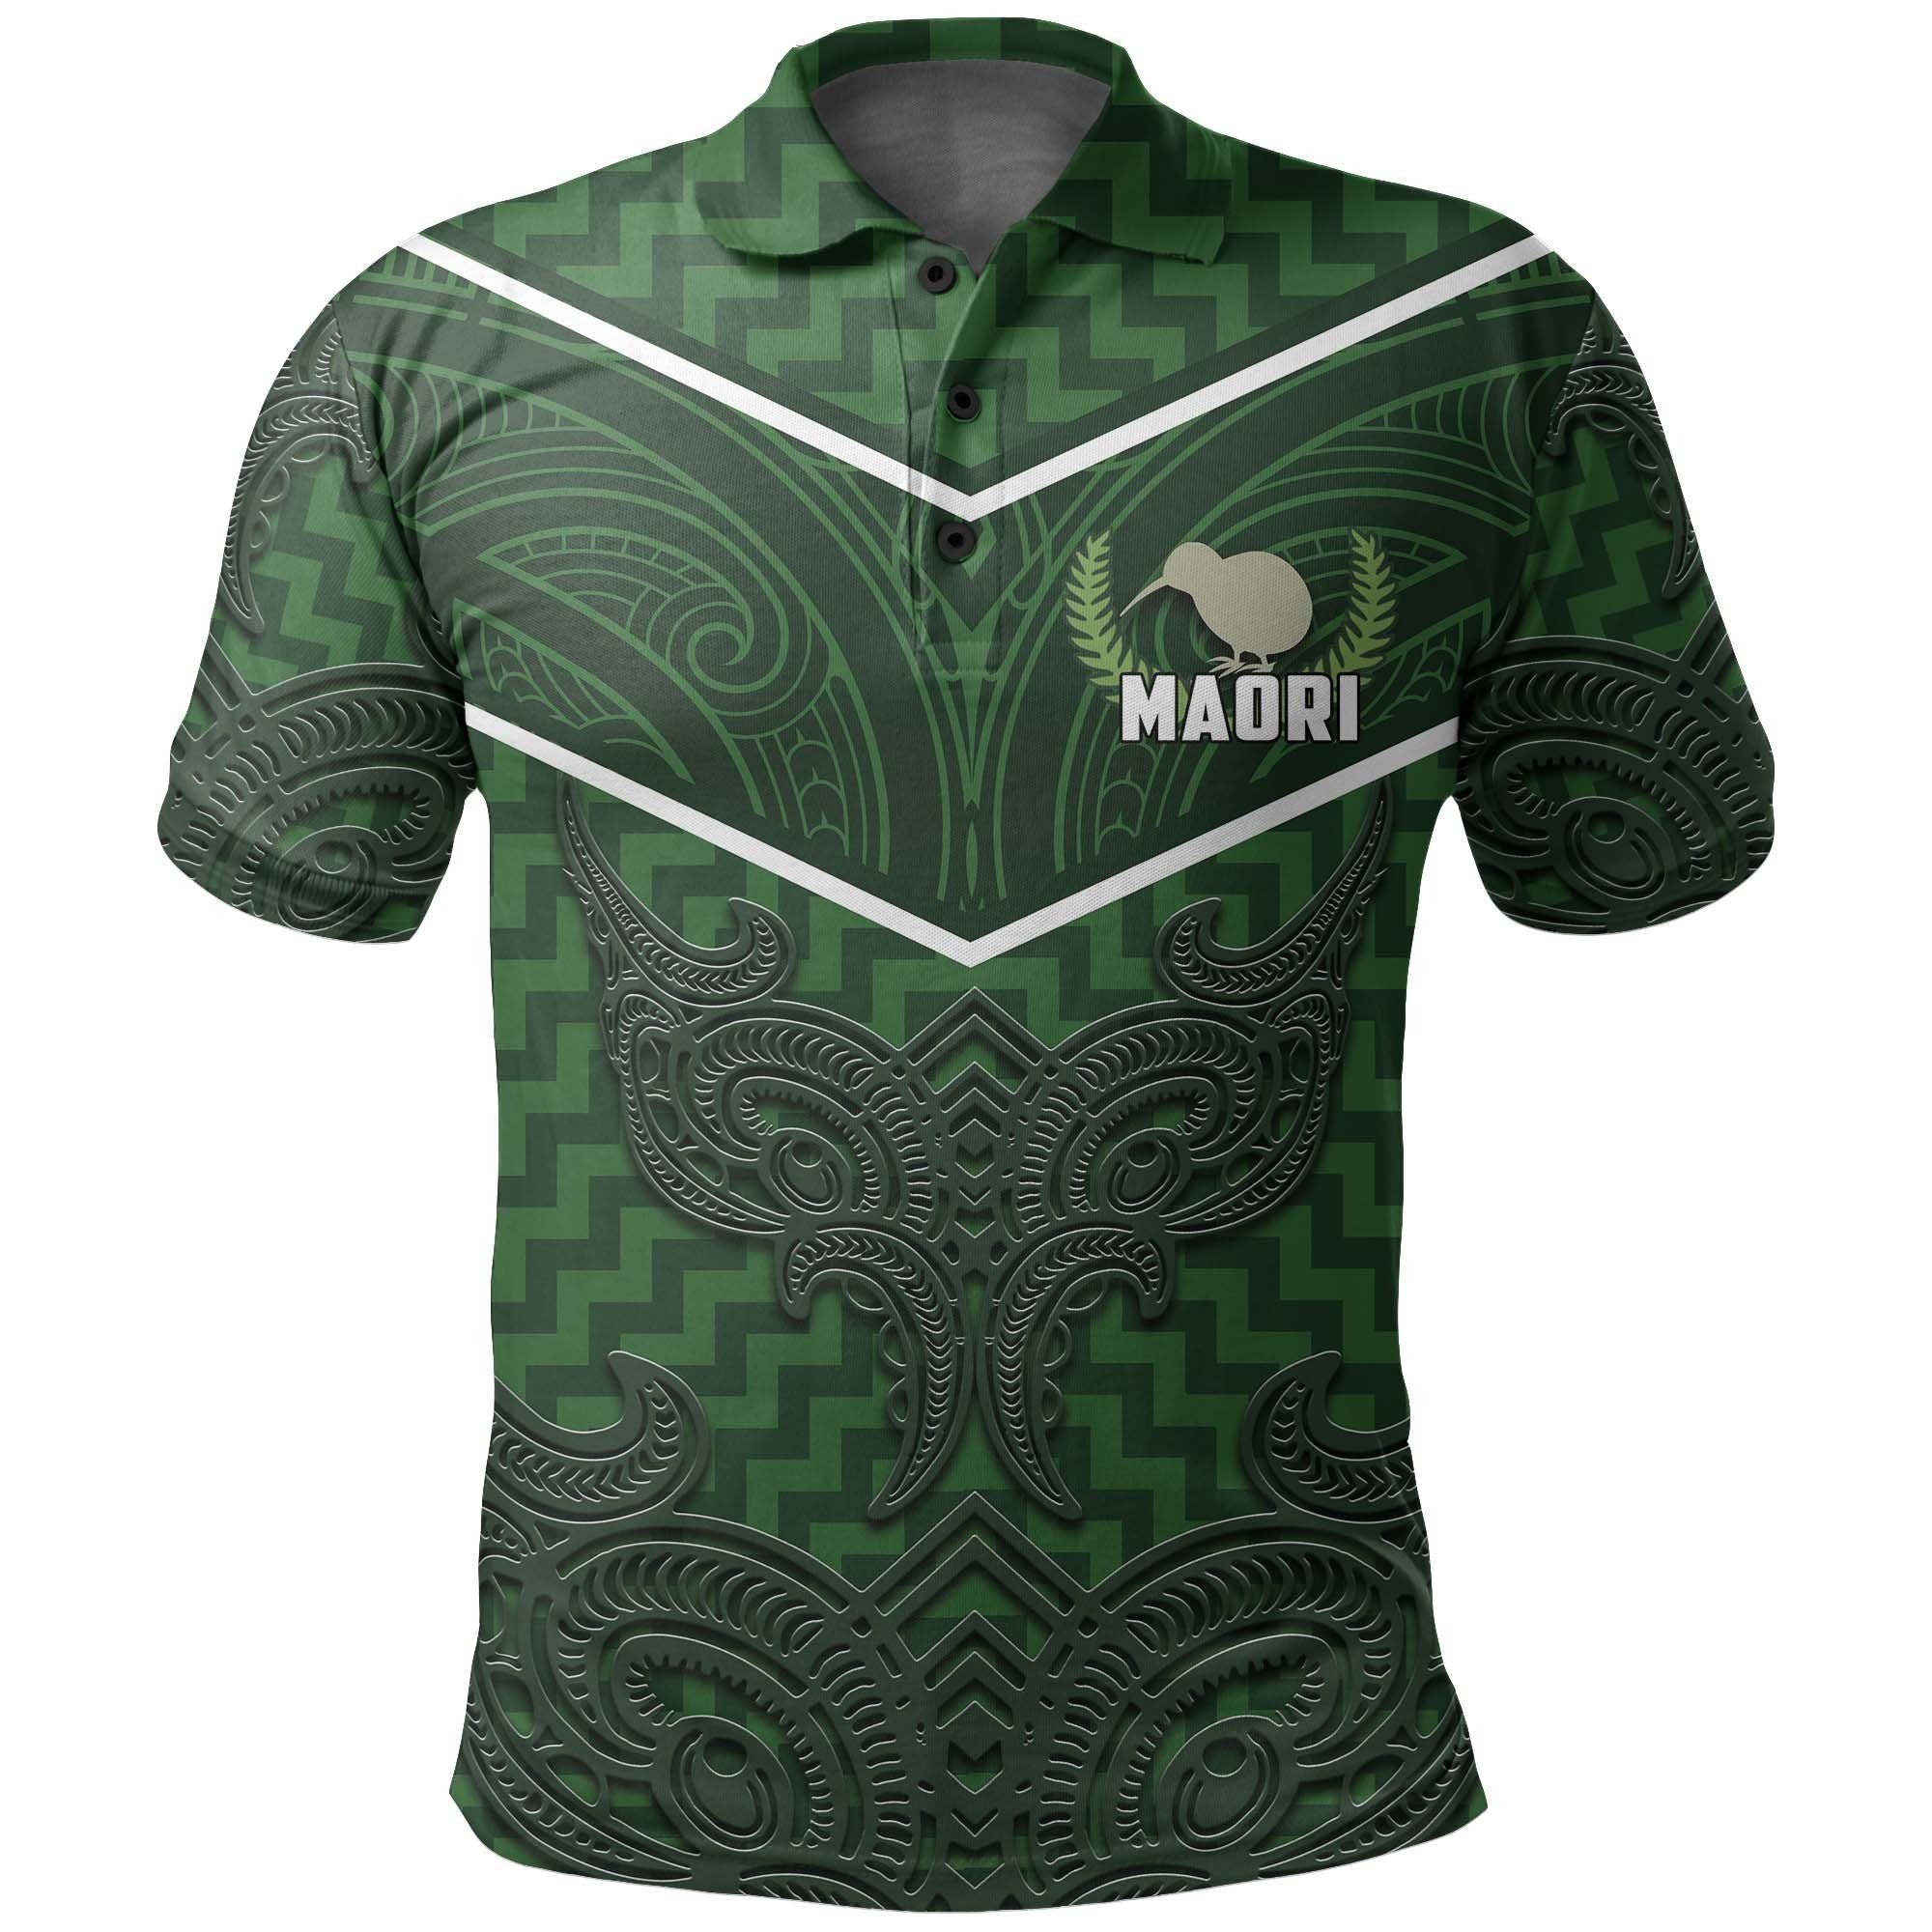 Polynesian Pride Apparel New Zealand Mori Rugby Polo Shirt Unisex Green - Polynesian Pride